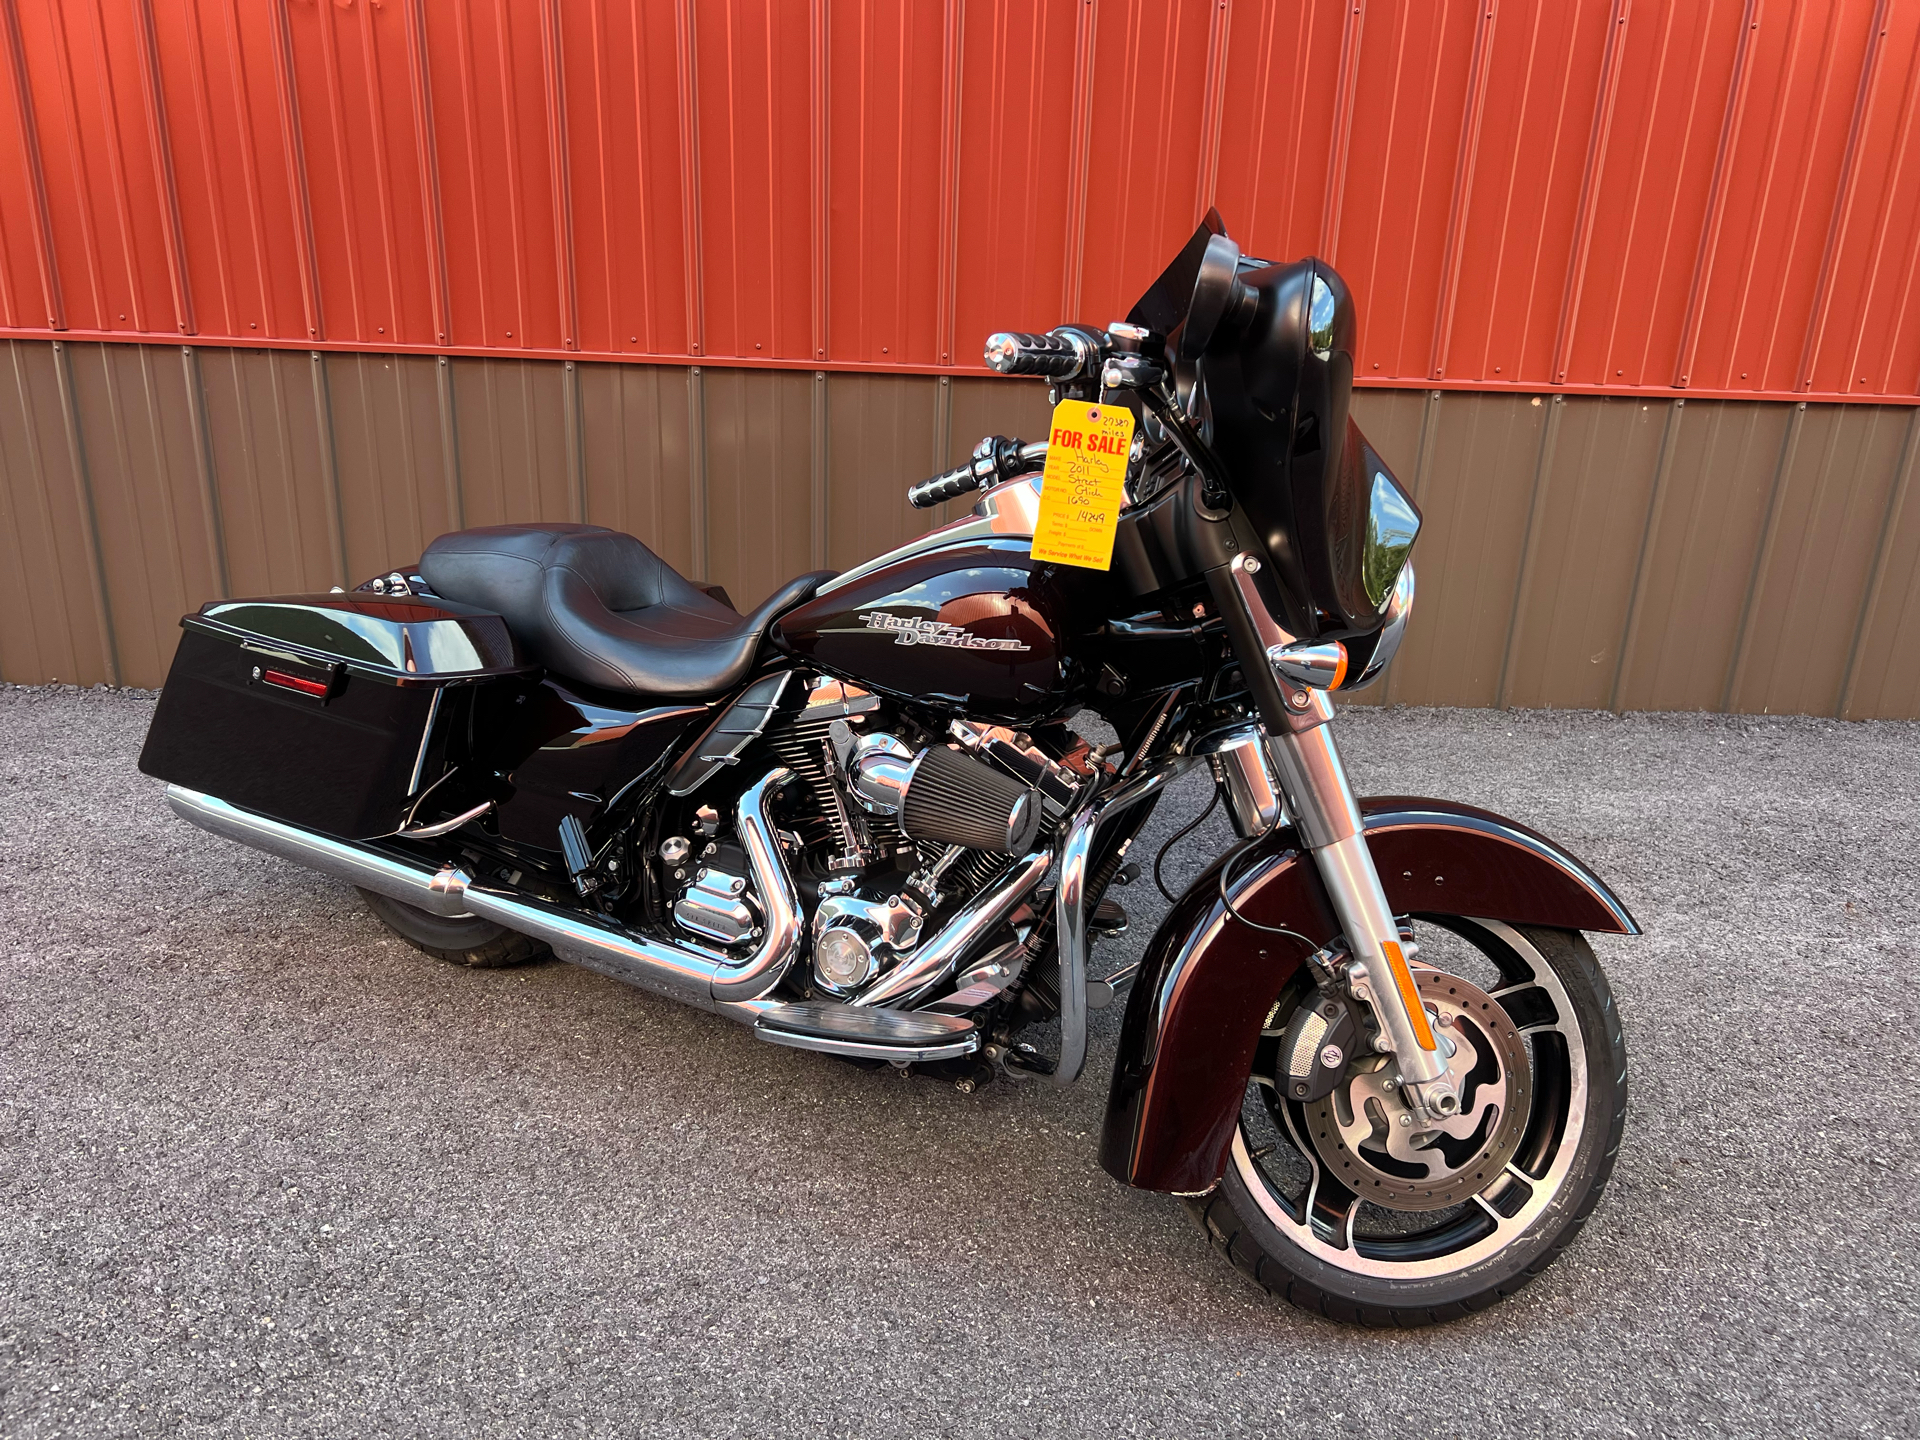 2011 Harley-Davidson Street Glide® in Tyrone, Pennsylvania - Photo 1